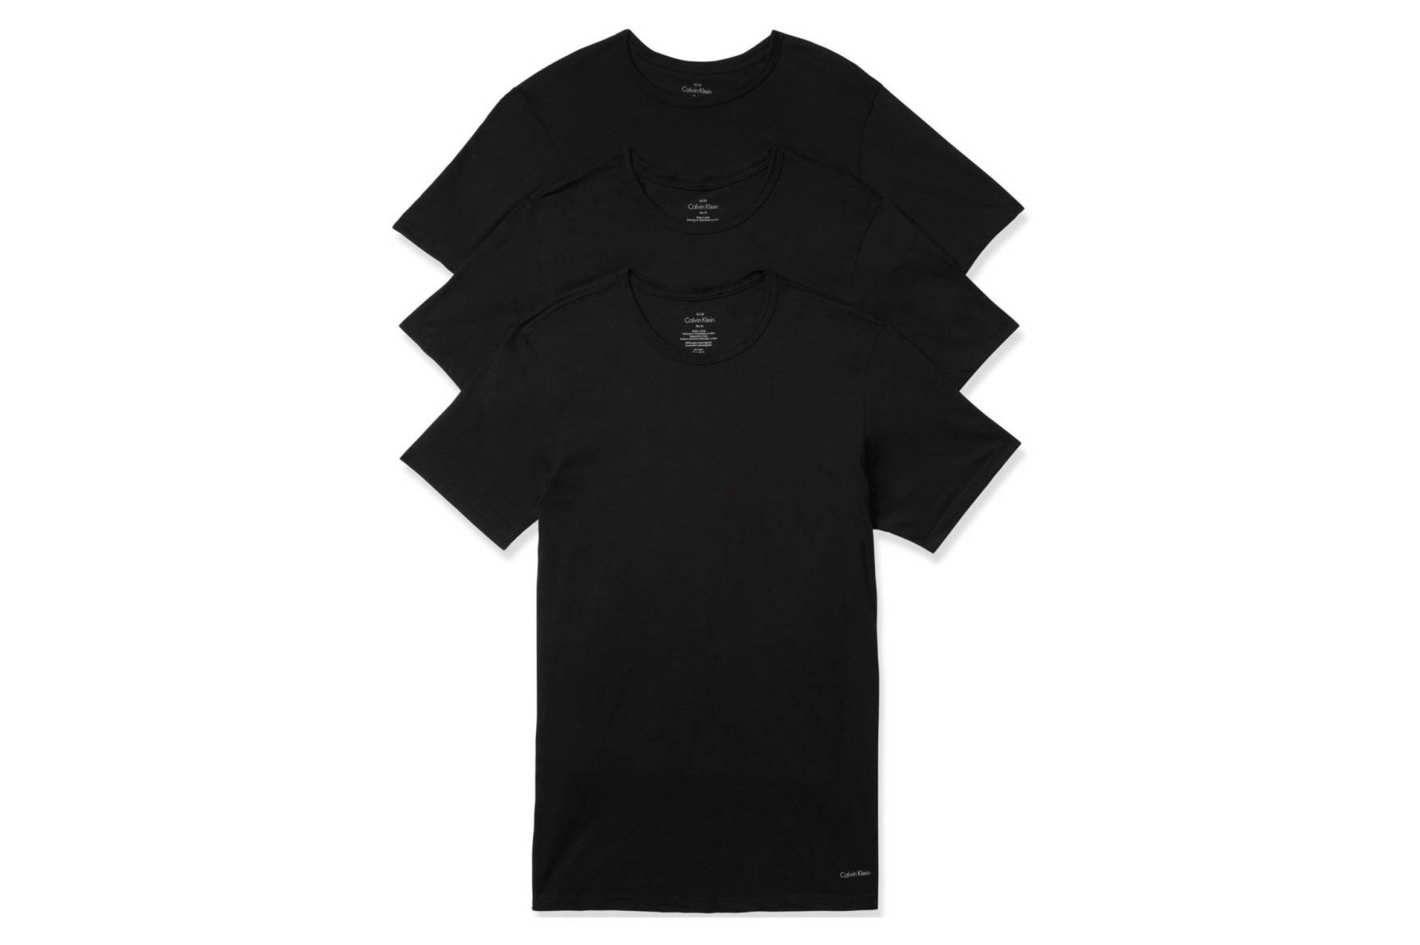 Best Black and White Logo - Best Black T Shirts For Men 2018